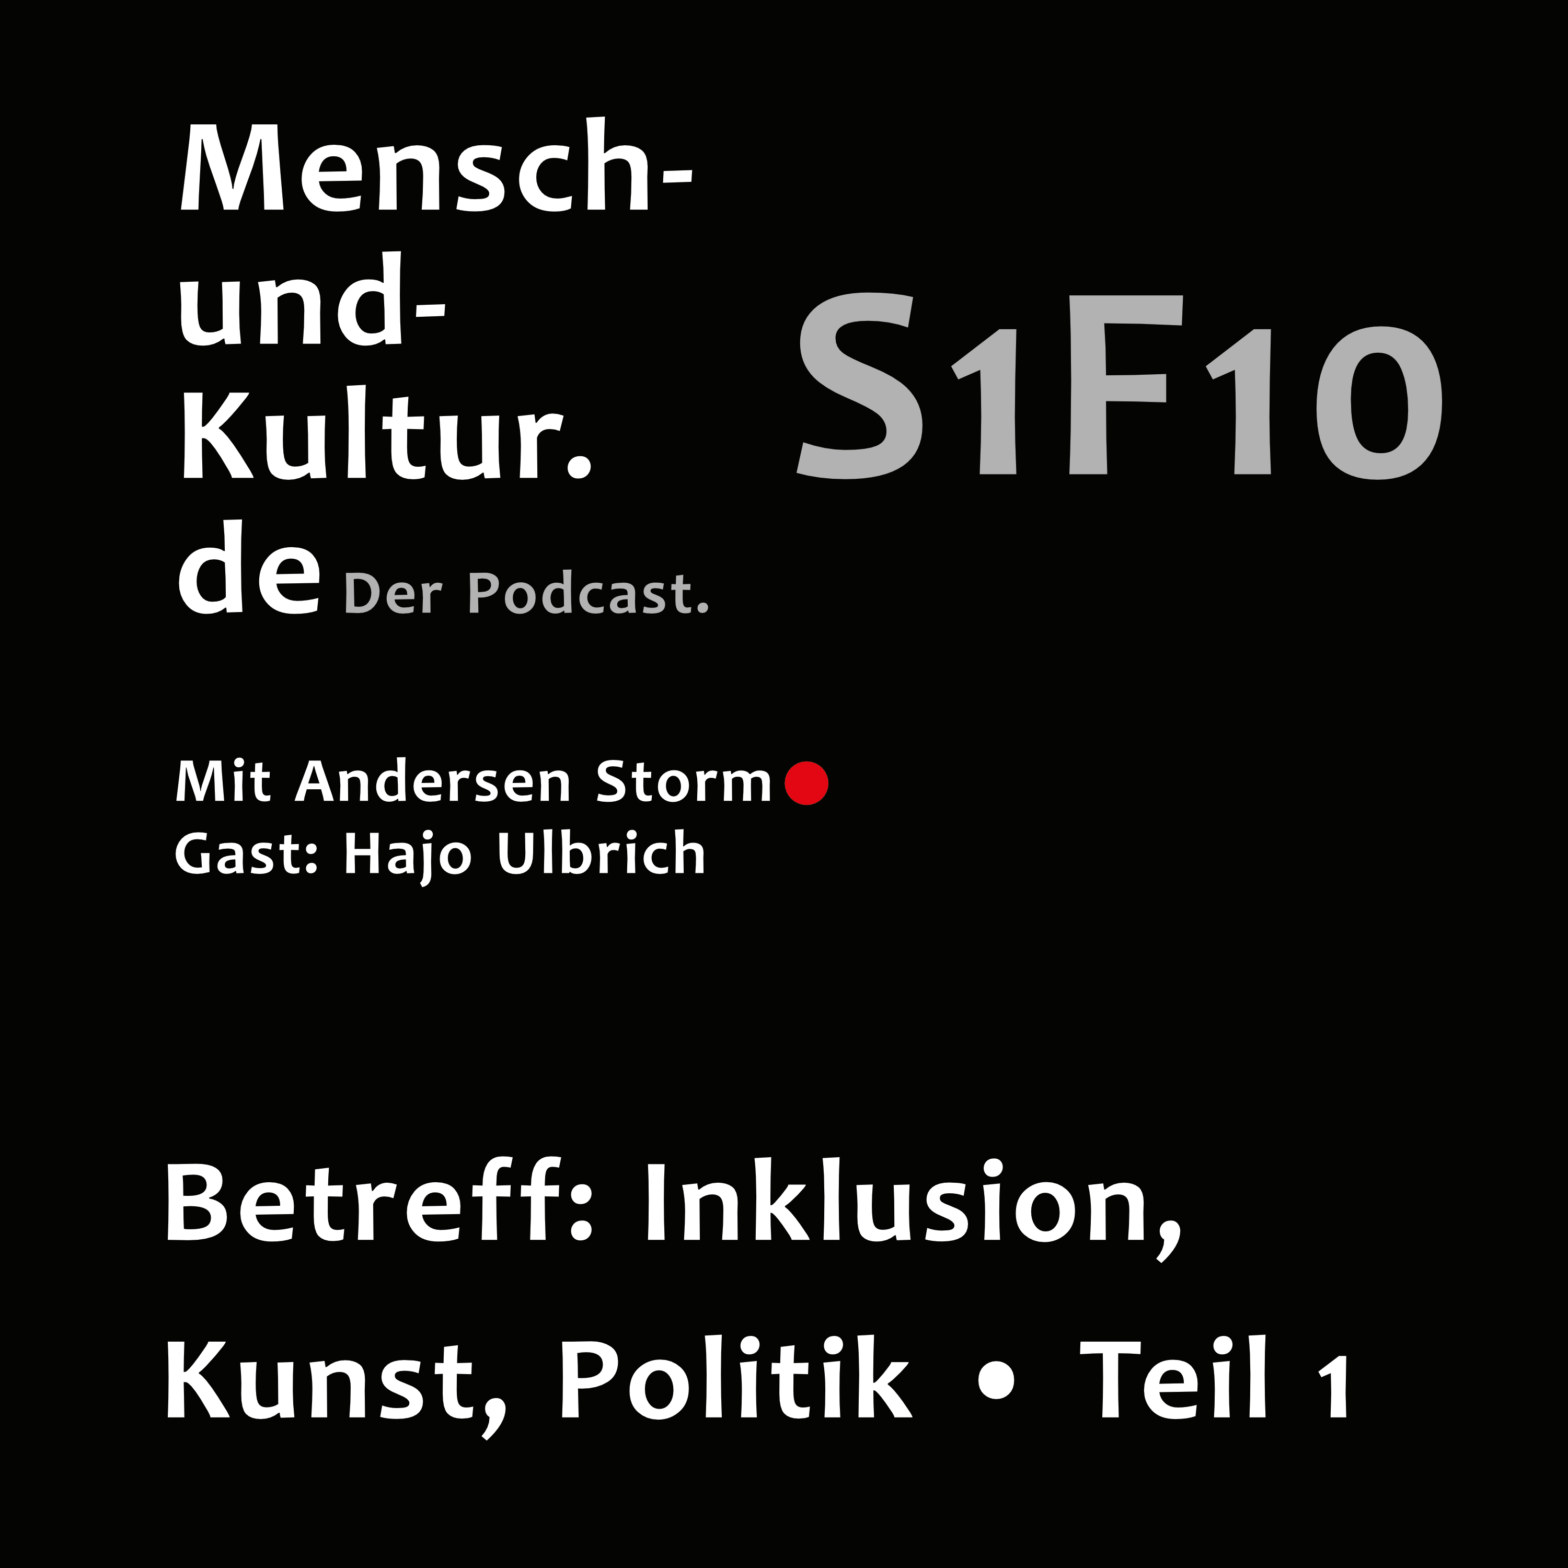 Podcastepisode S1F10, Mensch-und-Kultur.de - der Podcast